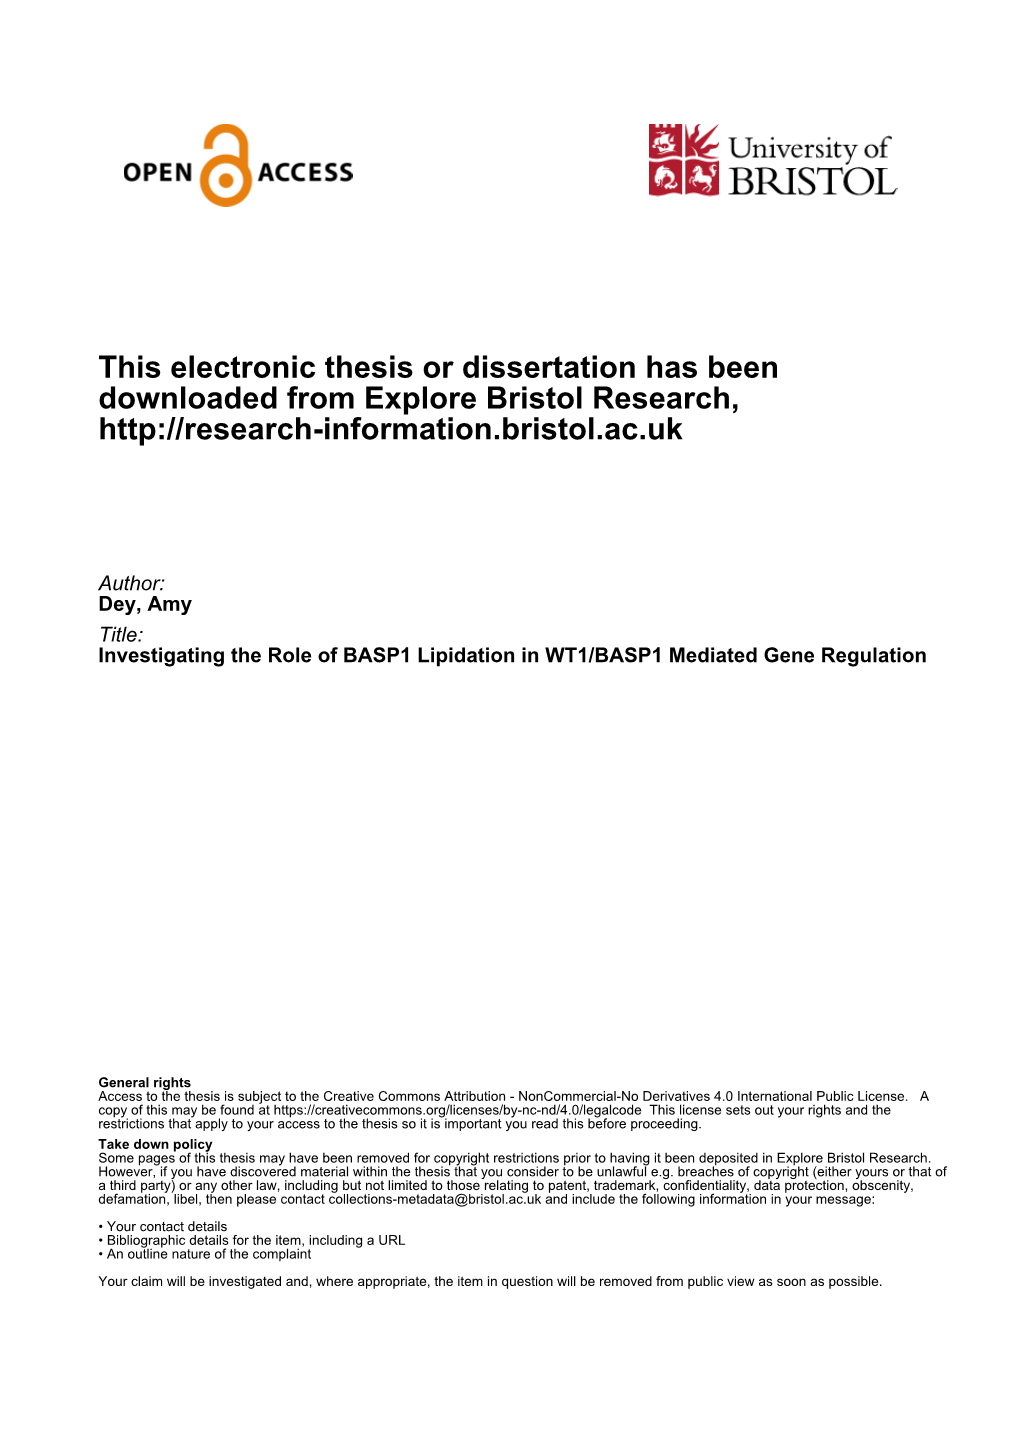 Investigating the Role of BASP1 Lipidation in WT1/BASP1 Mediated Gene Regulation